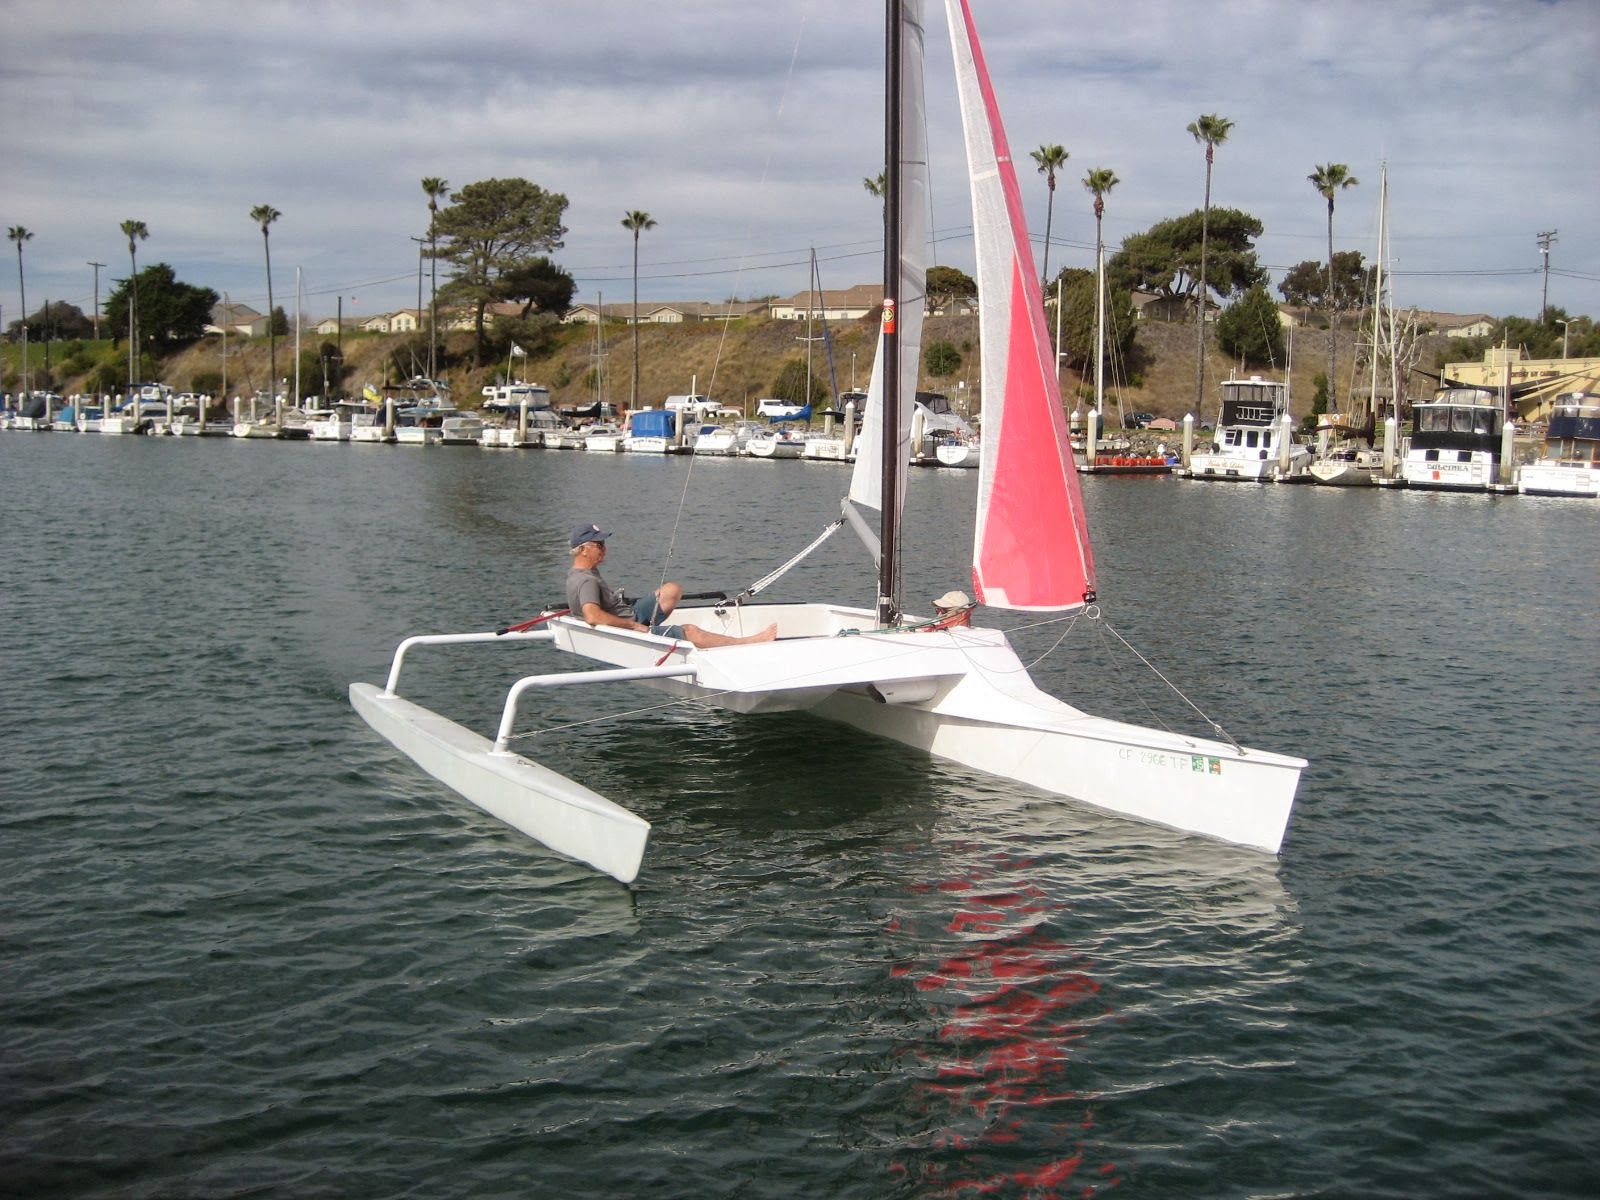 Outrigger Sailing Canoes: The SlattaRaptor